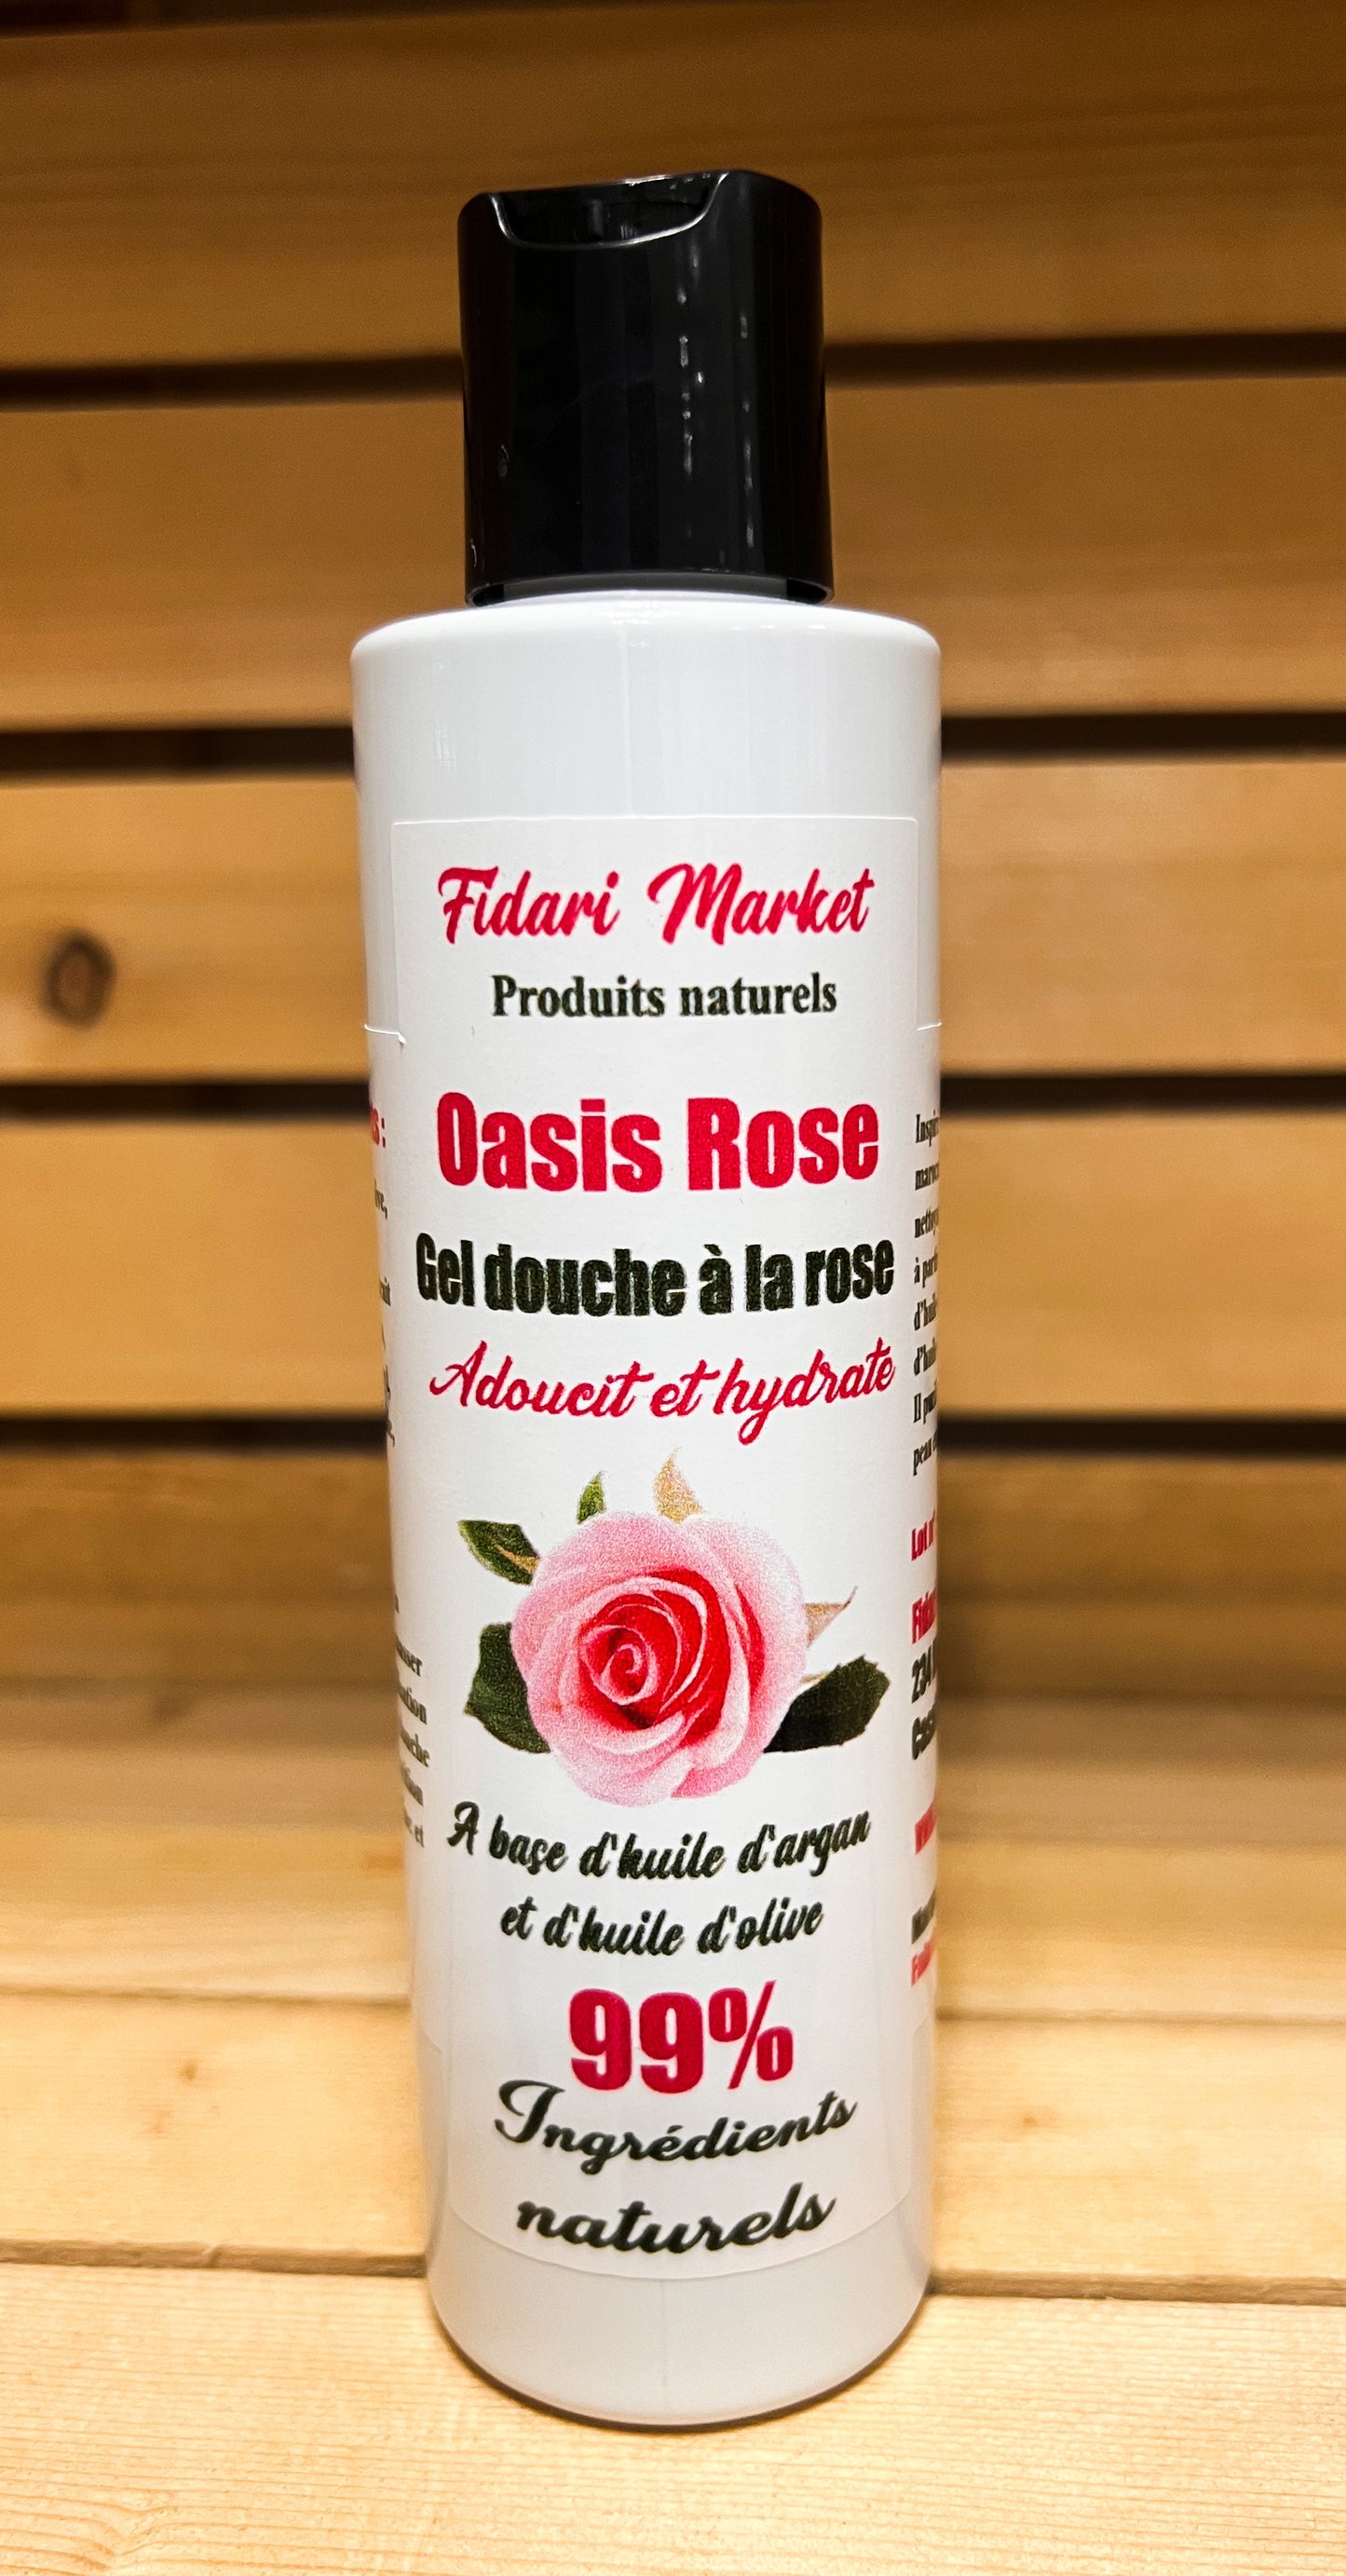 Oasis Rose جيل دوش الورد